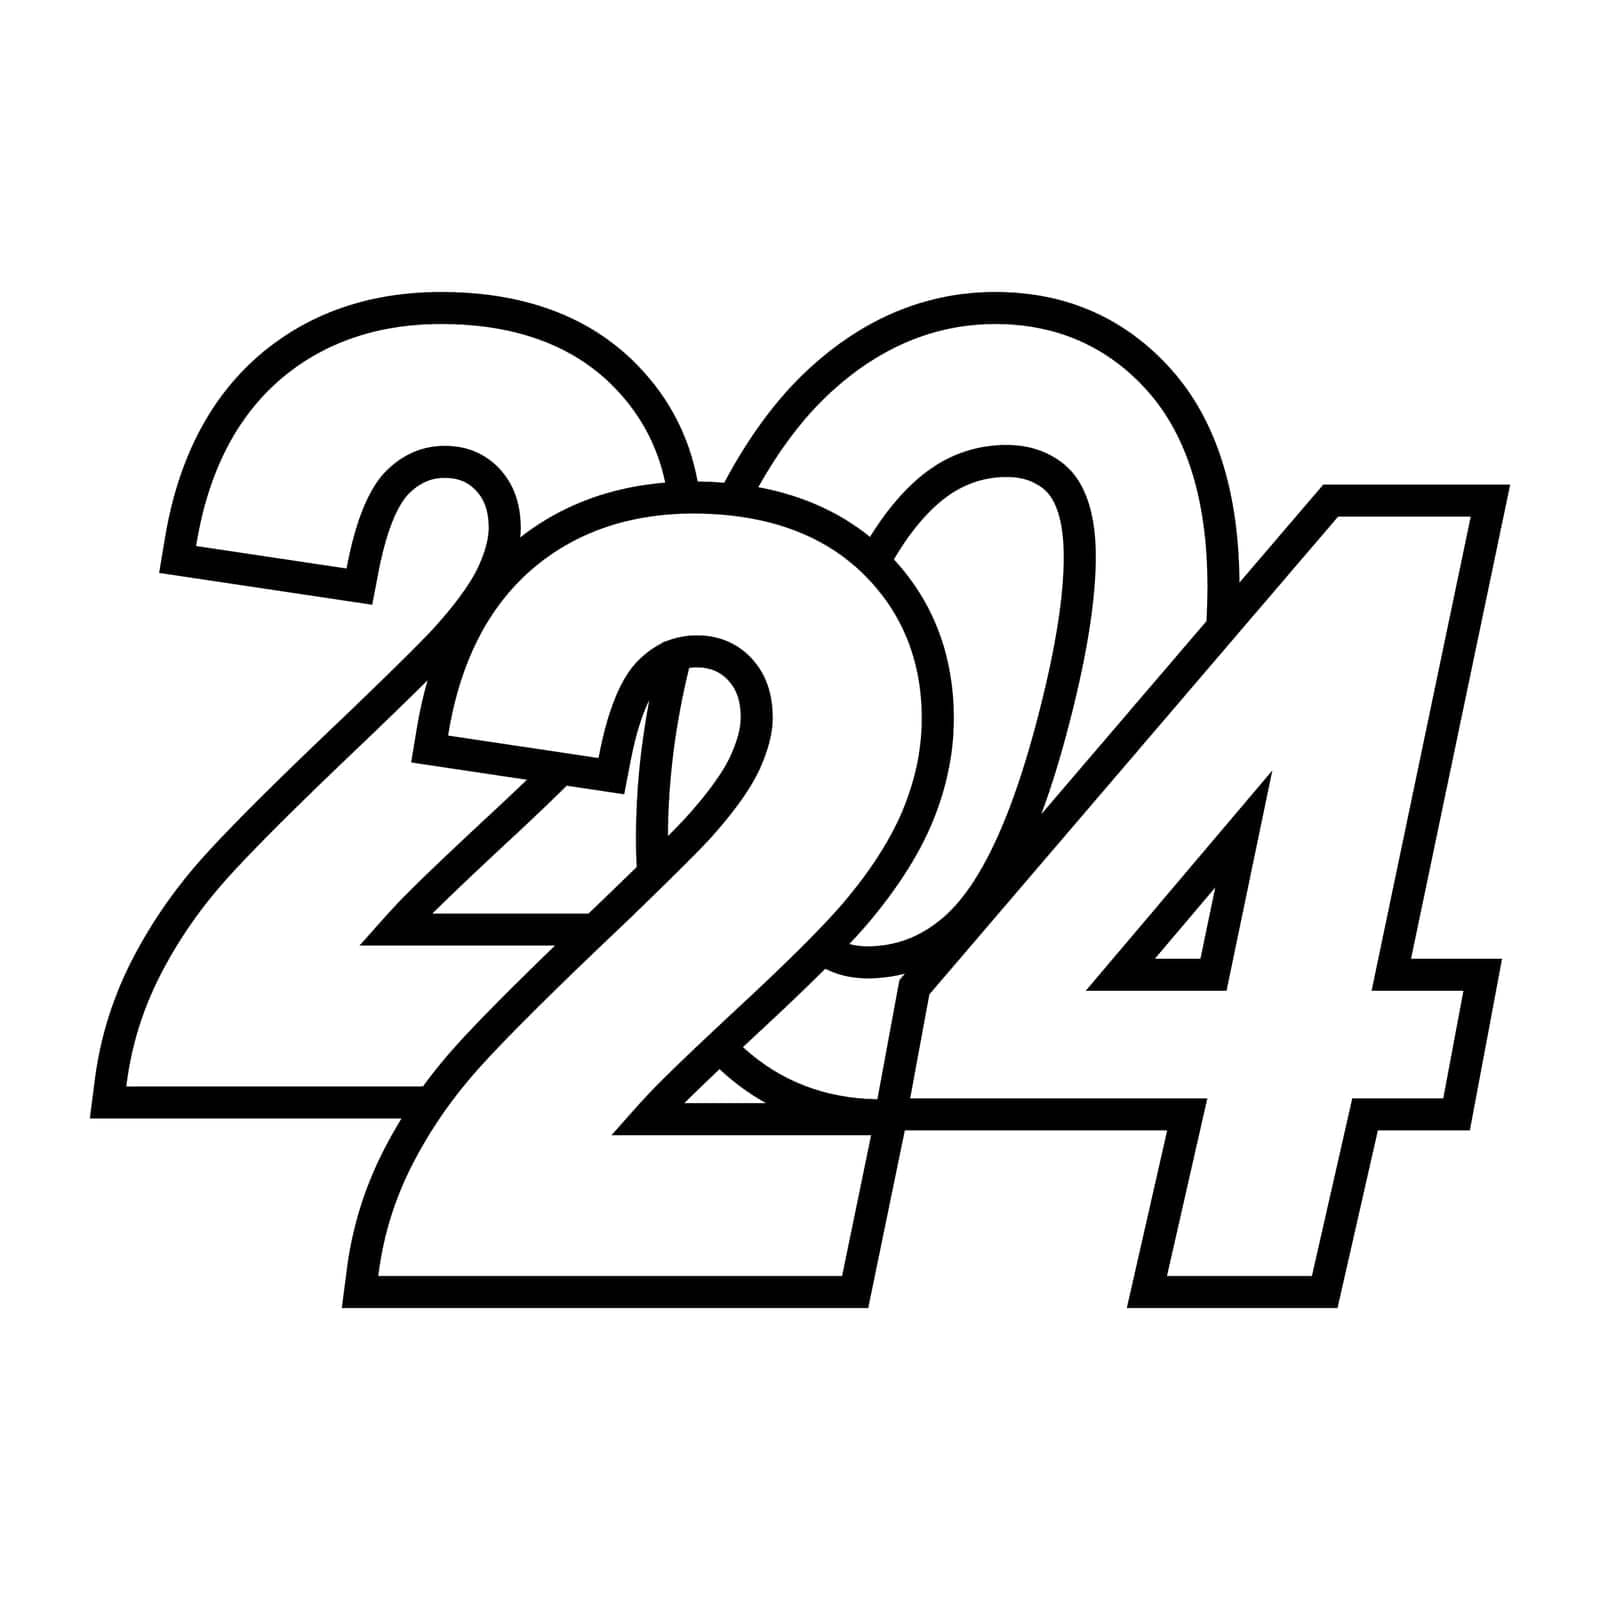 2024 logo lettering beveled font 24, medicine 2024 healthy lifestyle by koksikoks